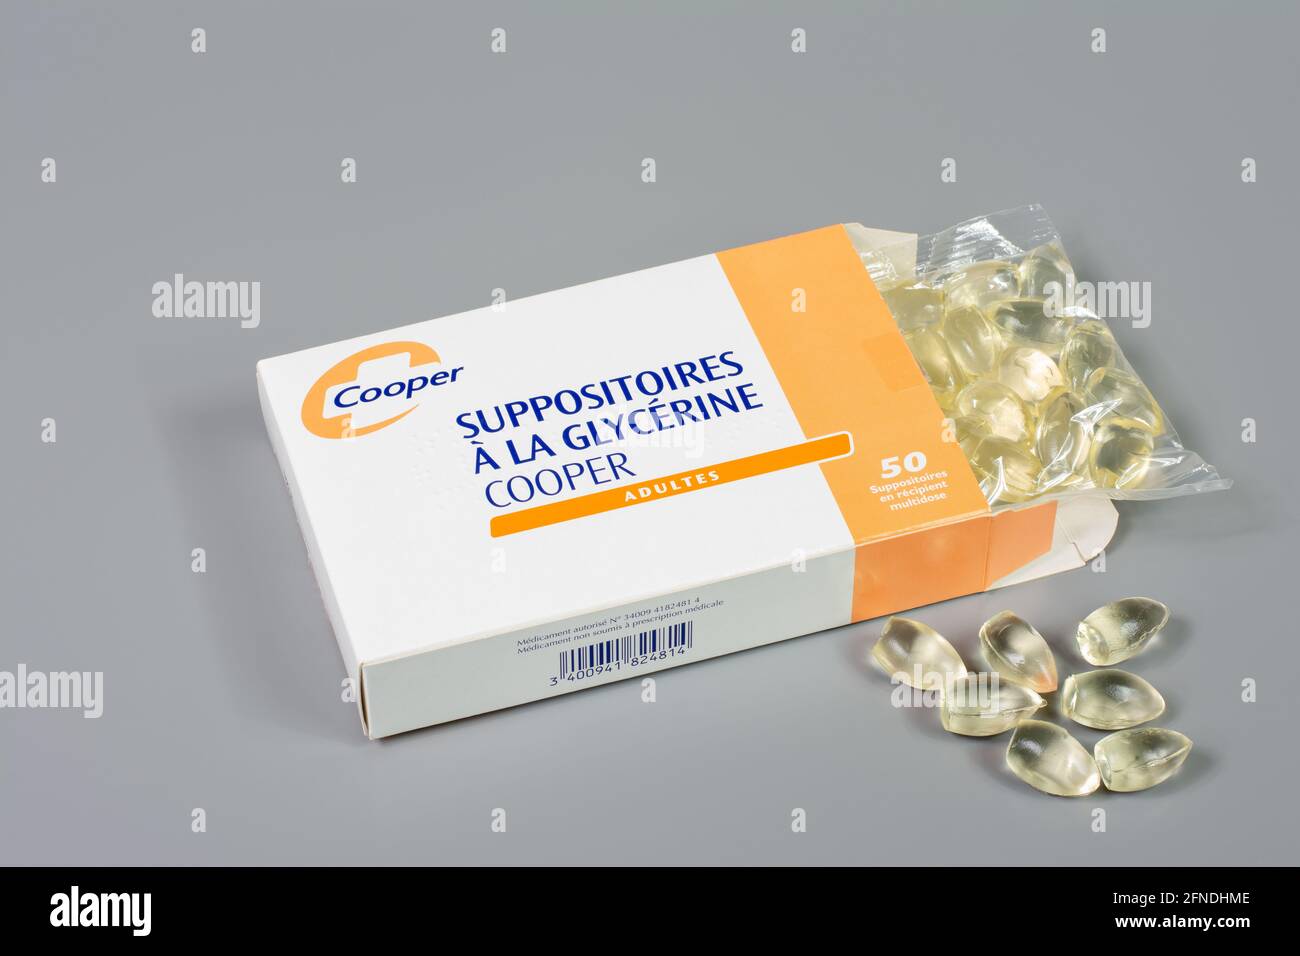 Cooper Brand Glycerin Suppository Box Stockfoto